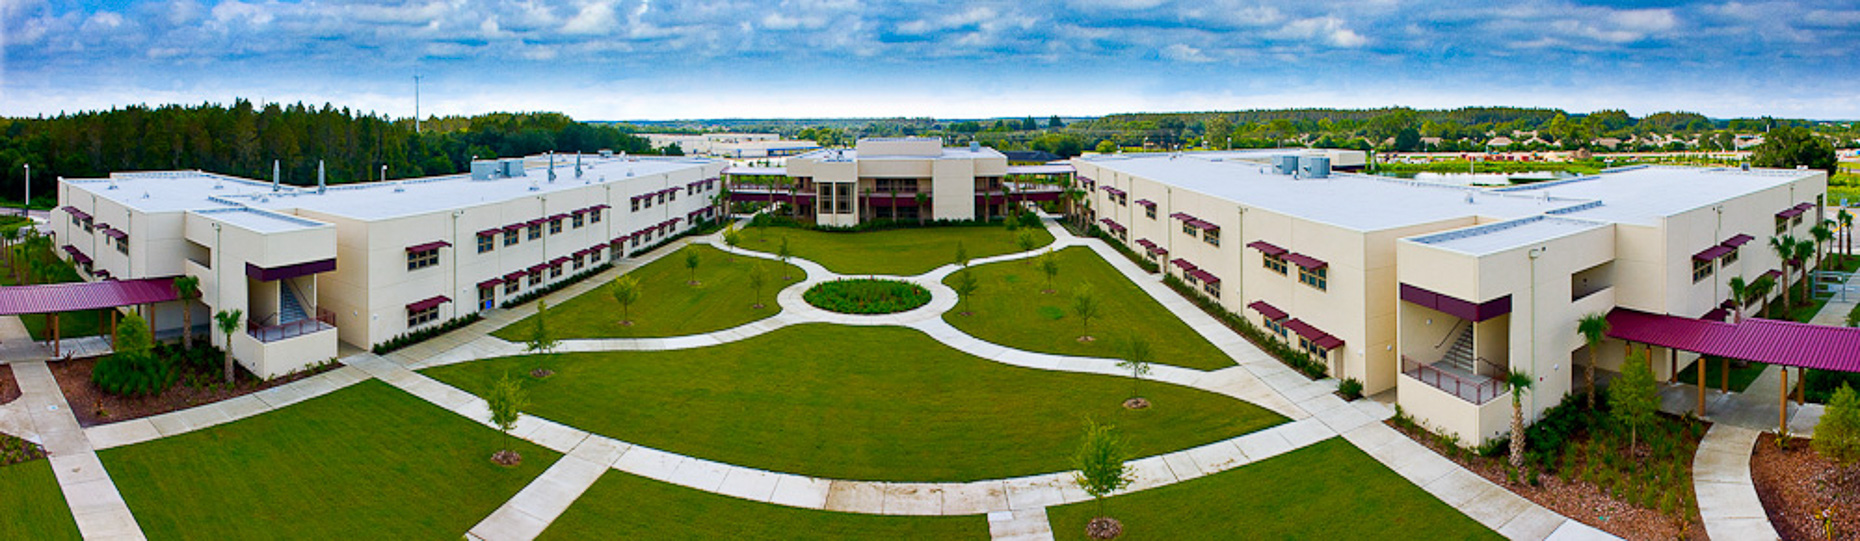 Aerial George Steinbrenner High School  - Mark Borosch Photography - Tampa, FL